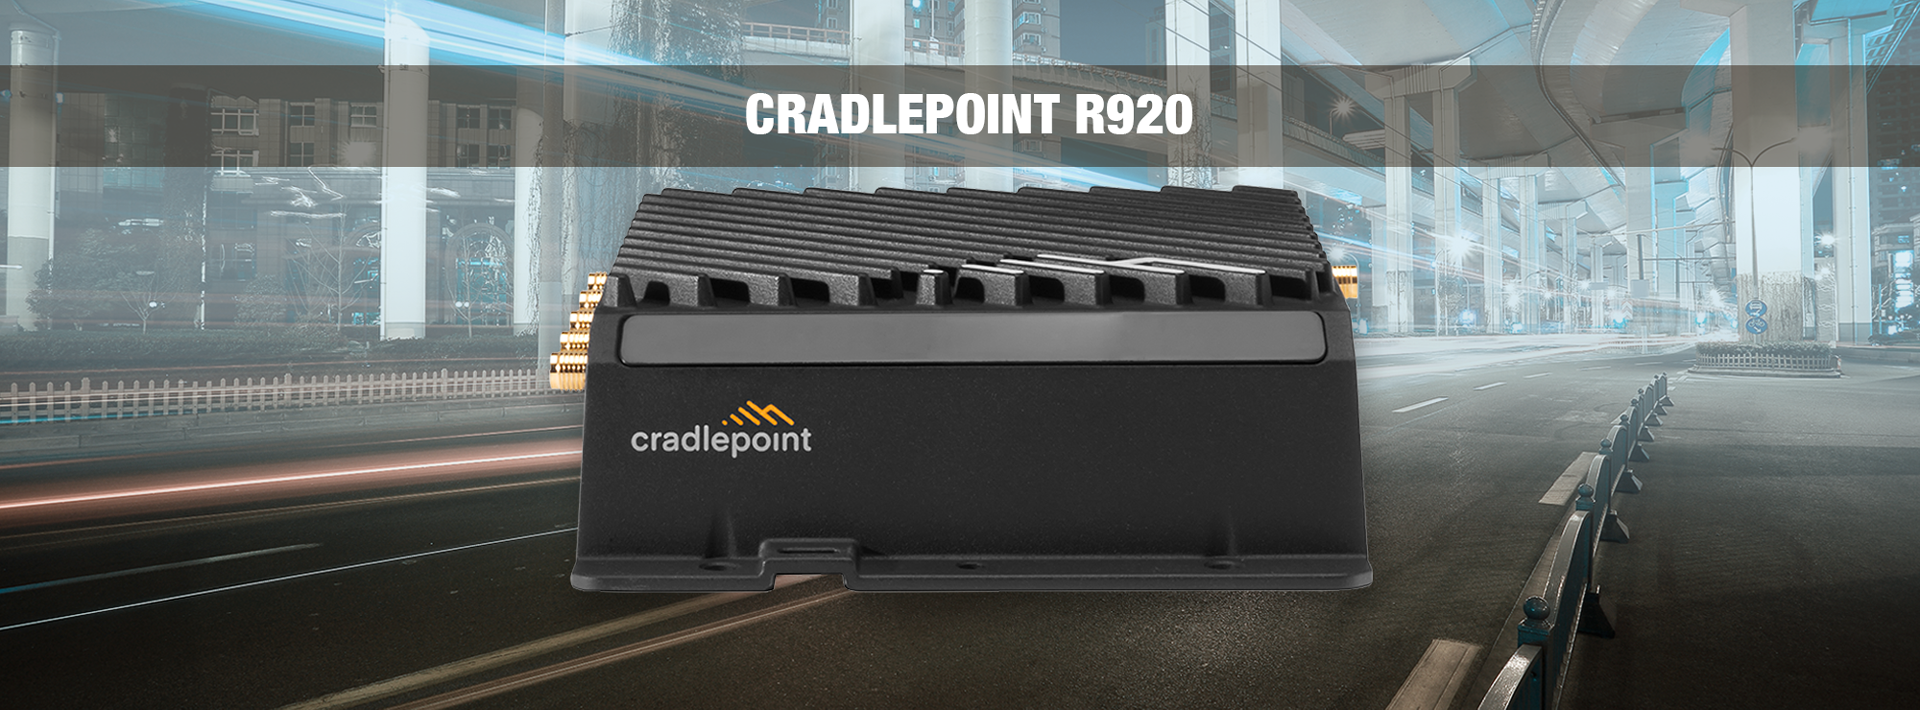 Cradlepoint R920